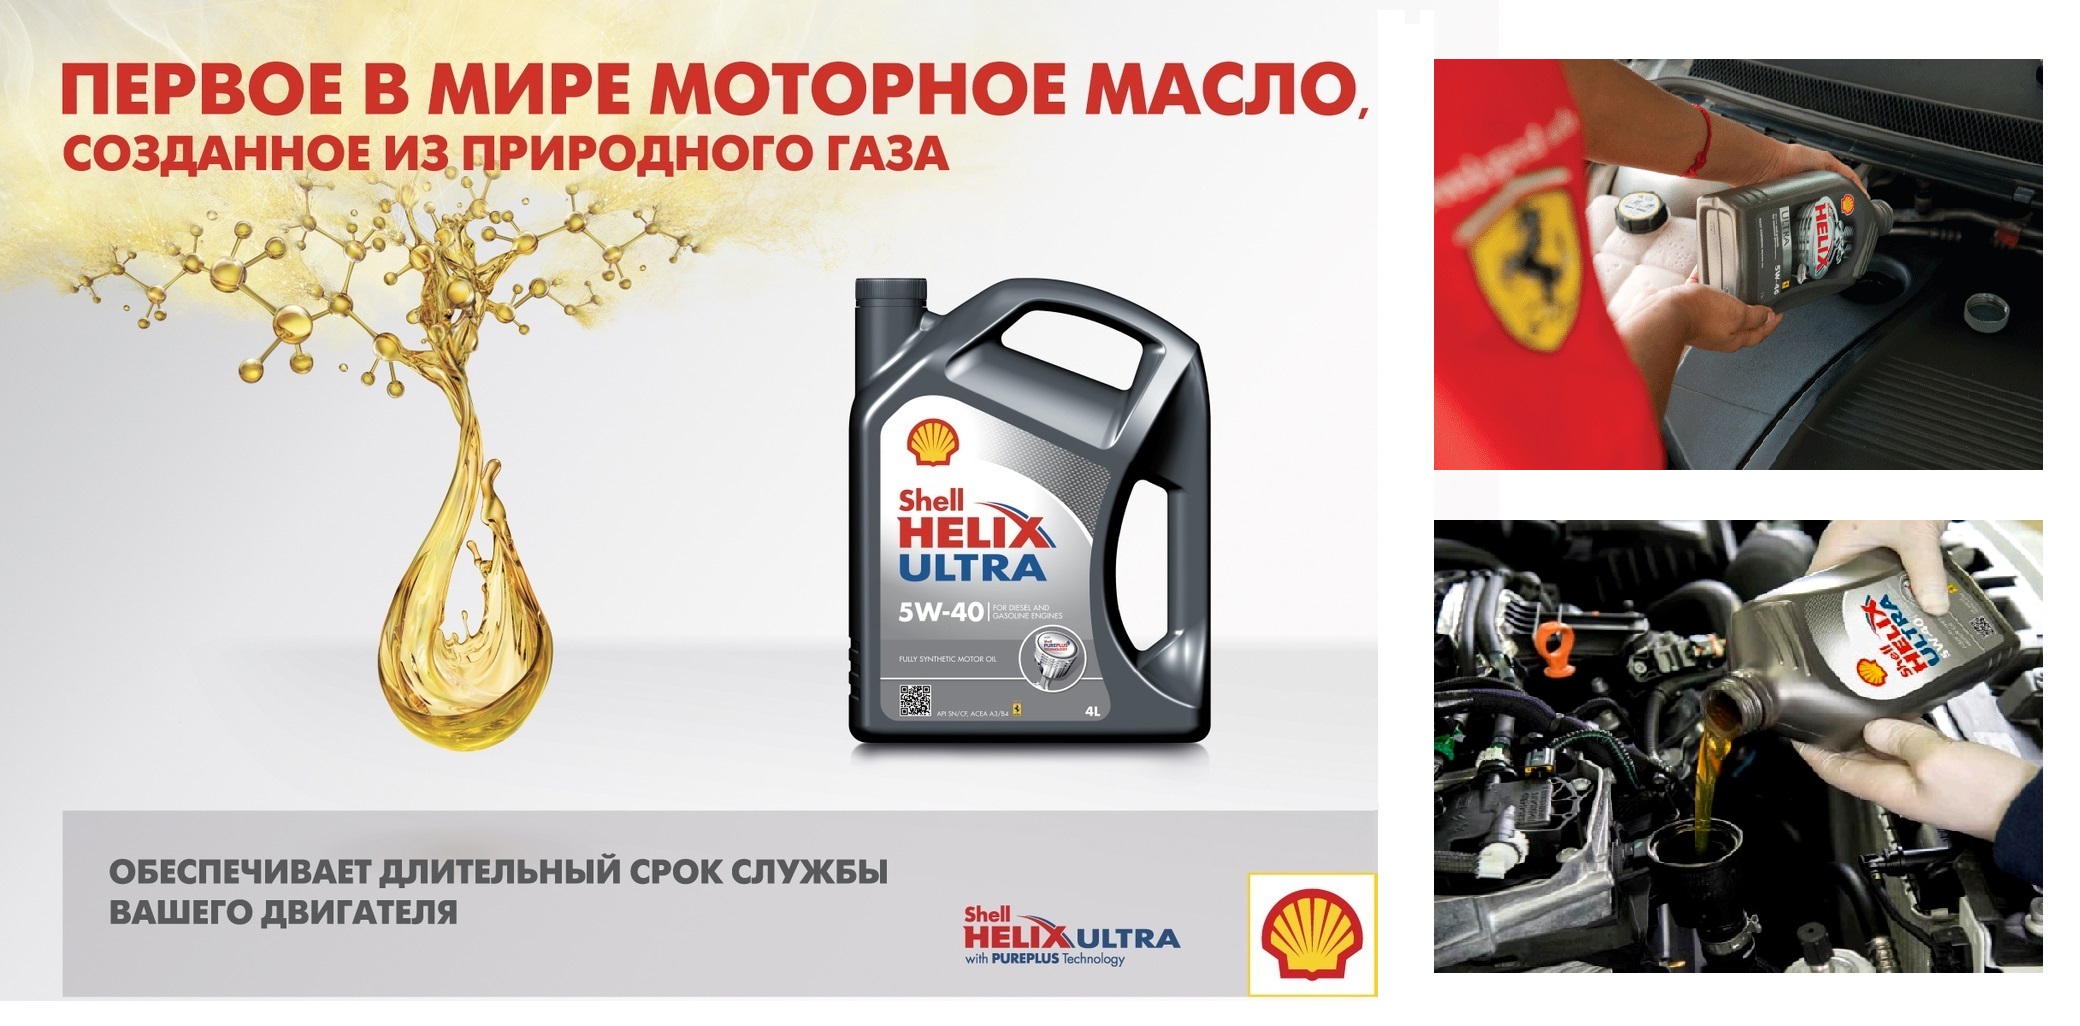 Масла россия дилеры. Моторное масло Shell Helix баннер. Реклама моторного масла Шелл Хеликс. Реклама автомобильного масла. Реклама моторного масла Shell.